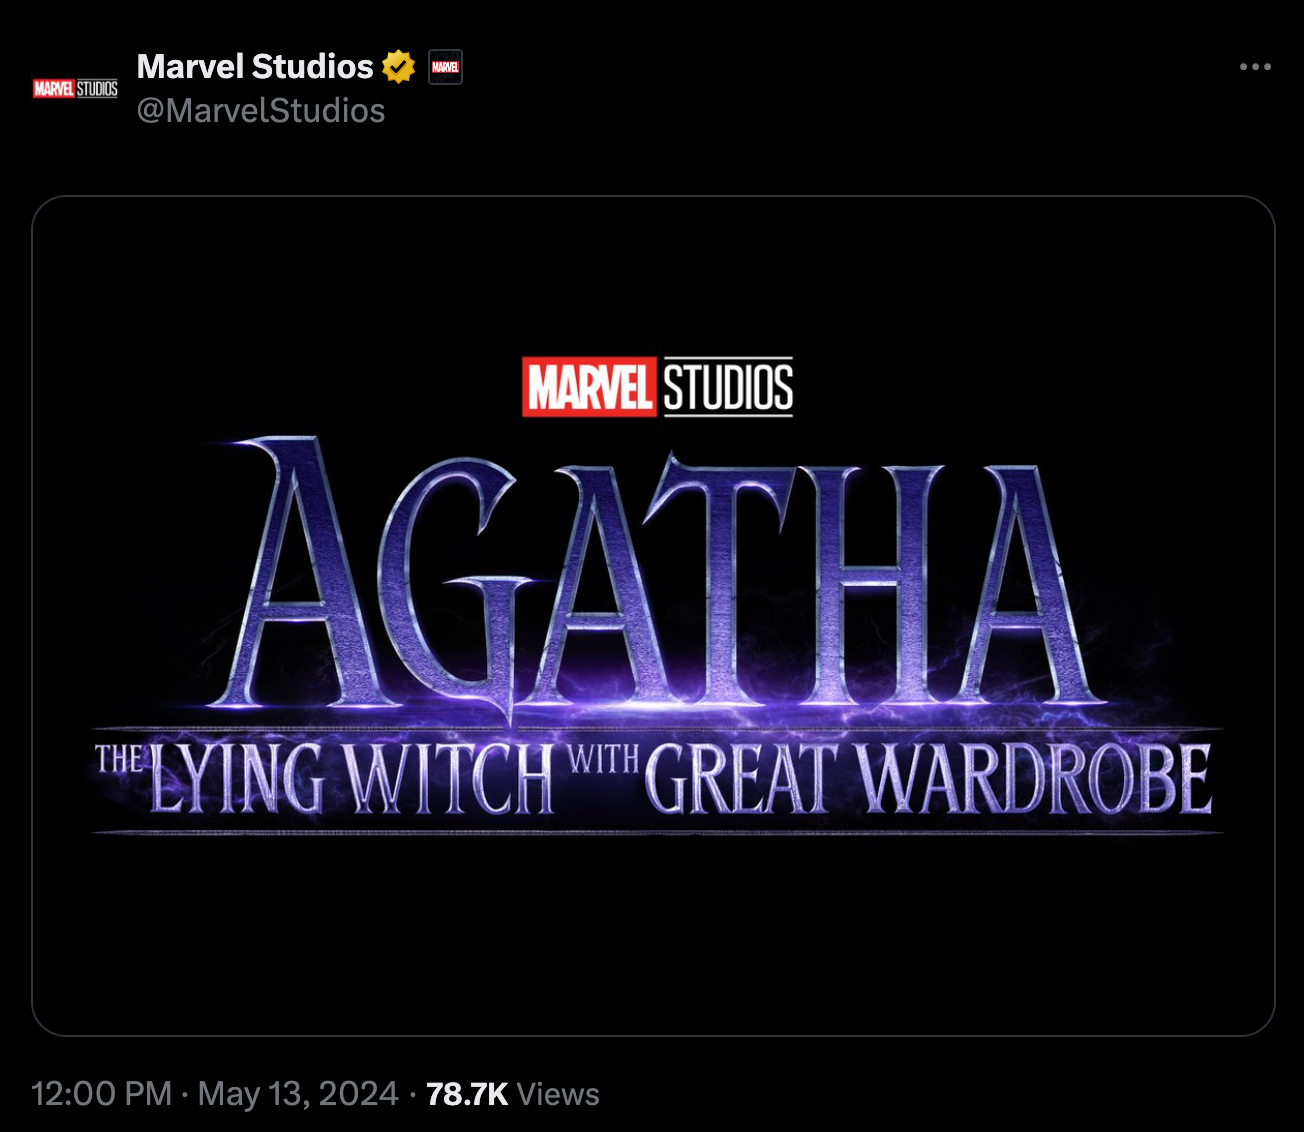 agatha-lying-witch-great-wardrobe-logo.png